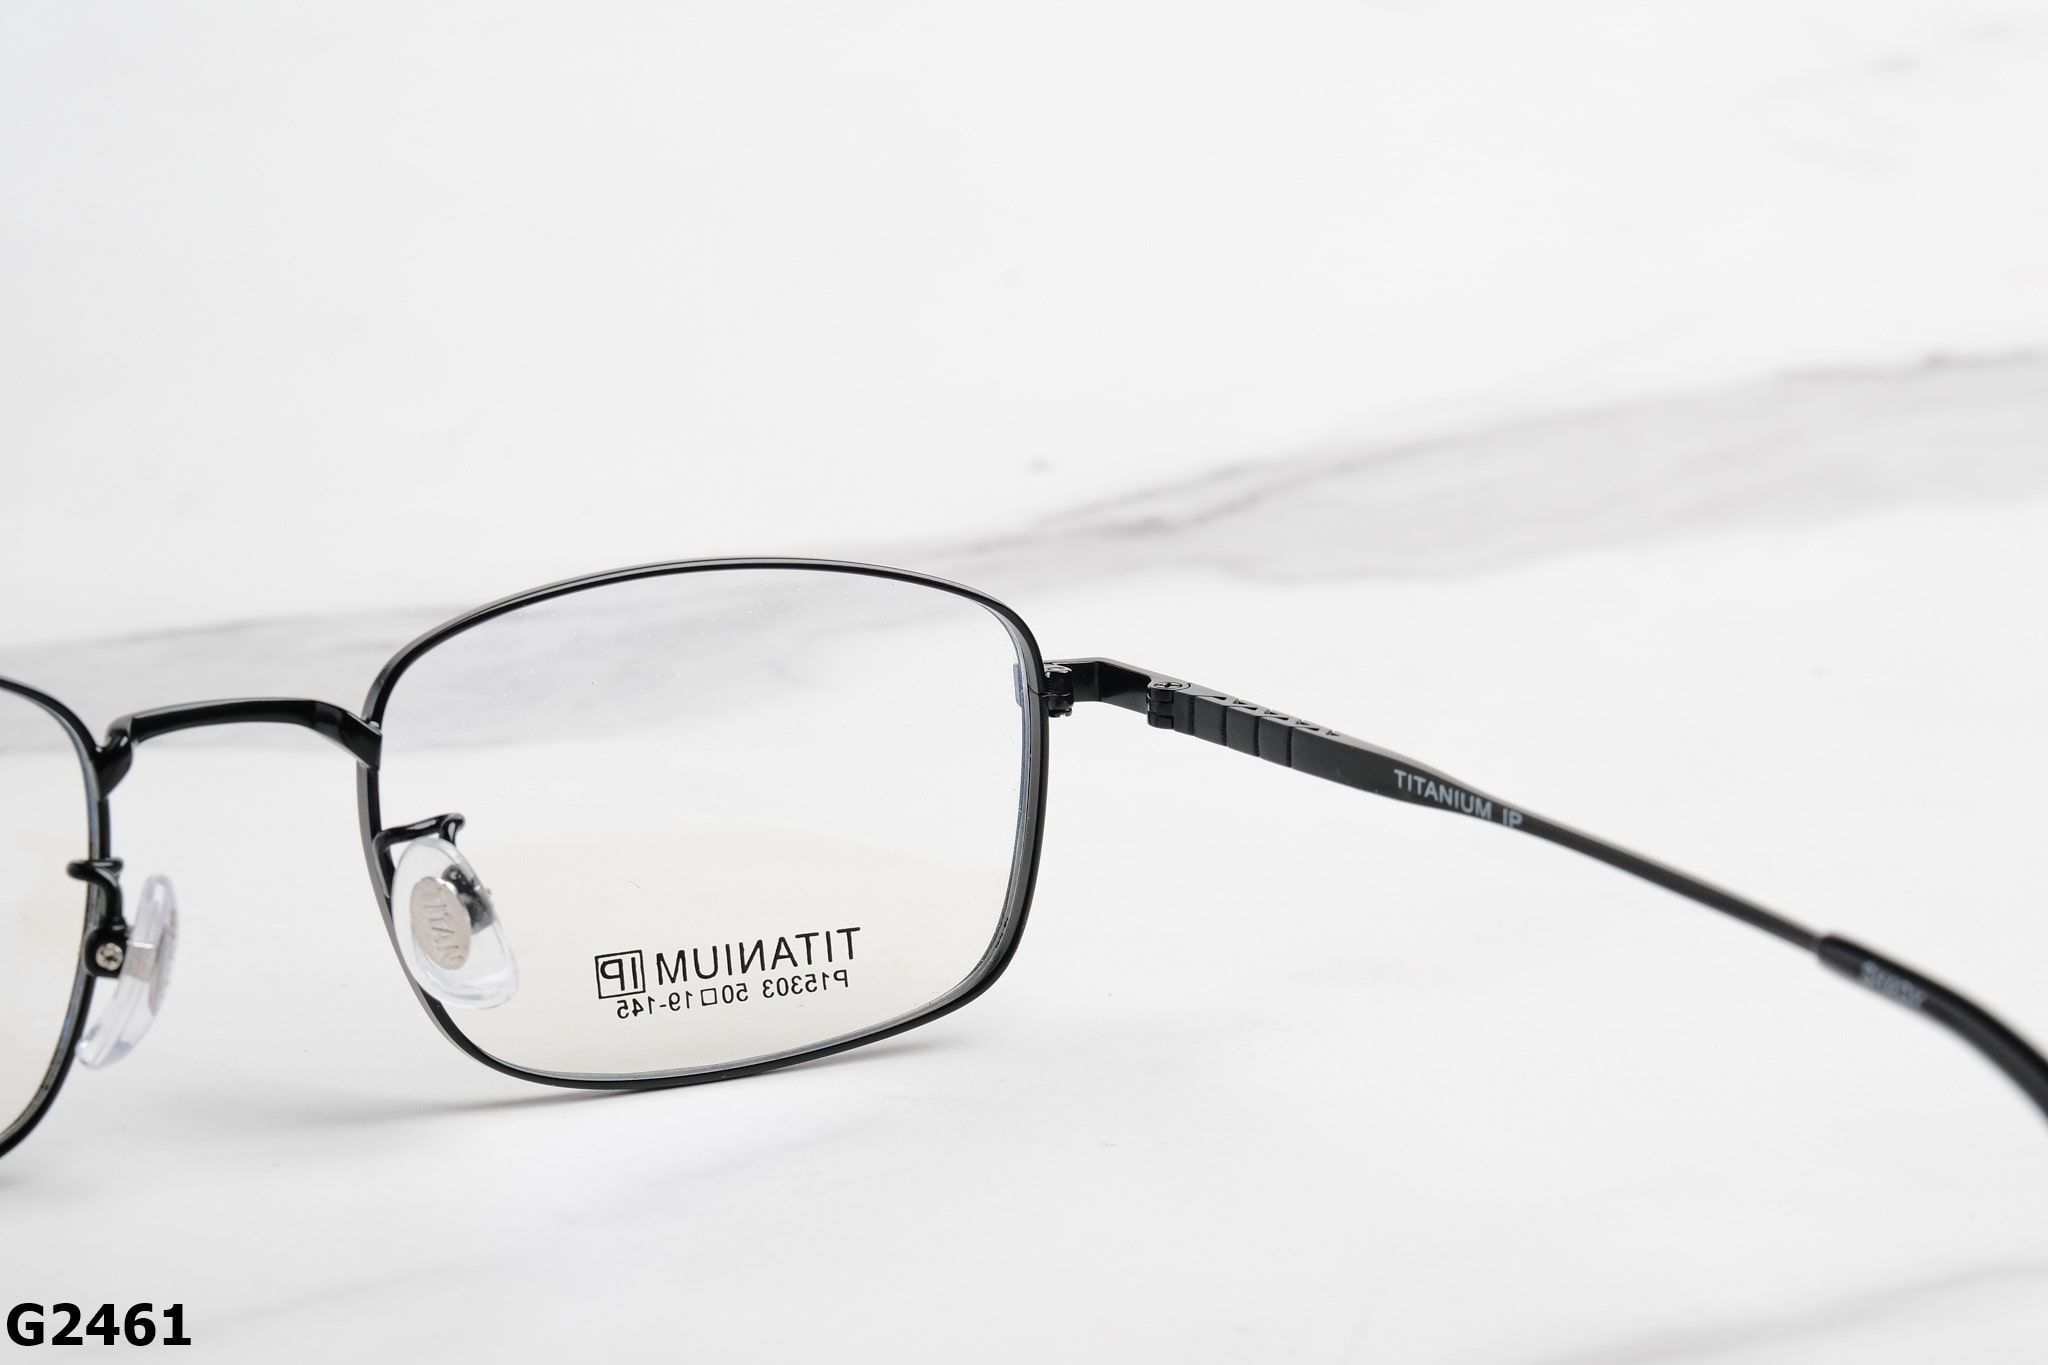  SHADY Eyewear - Glasses - G2461 